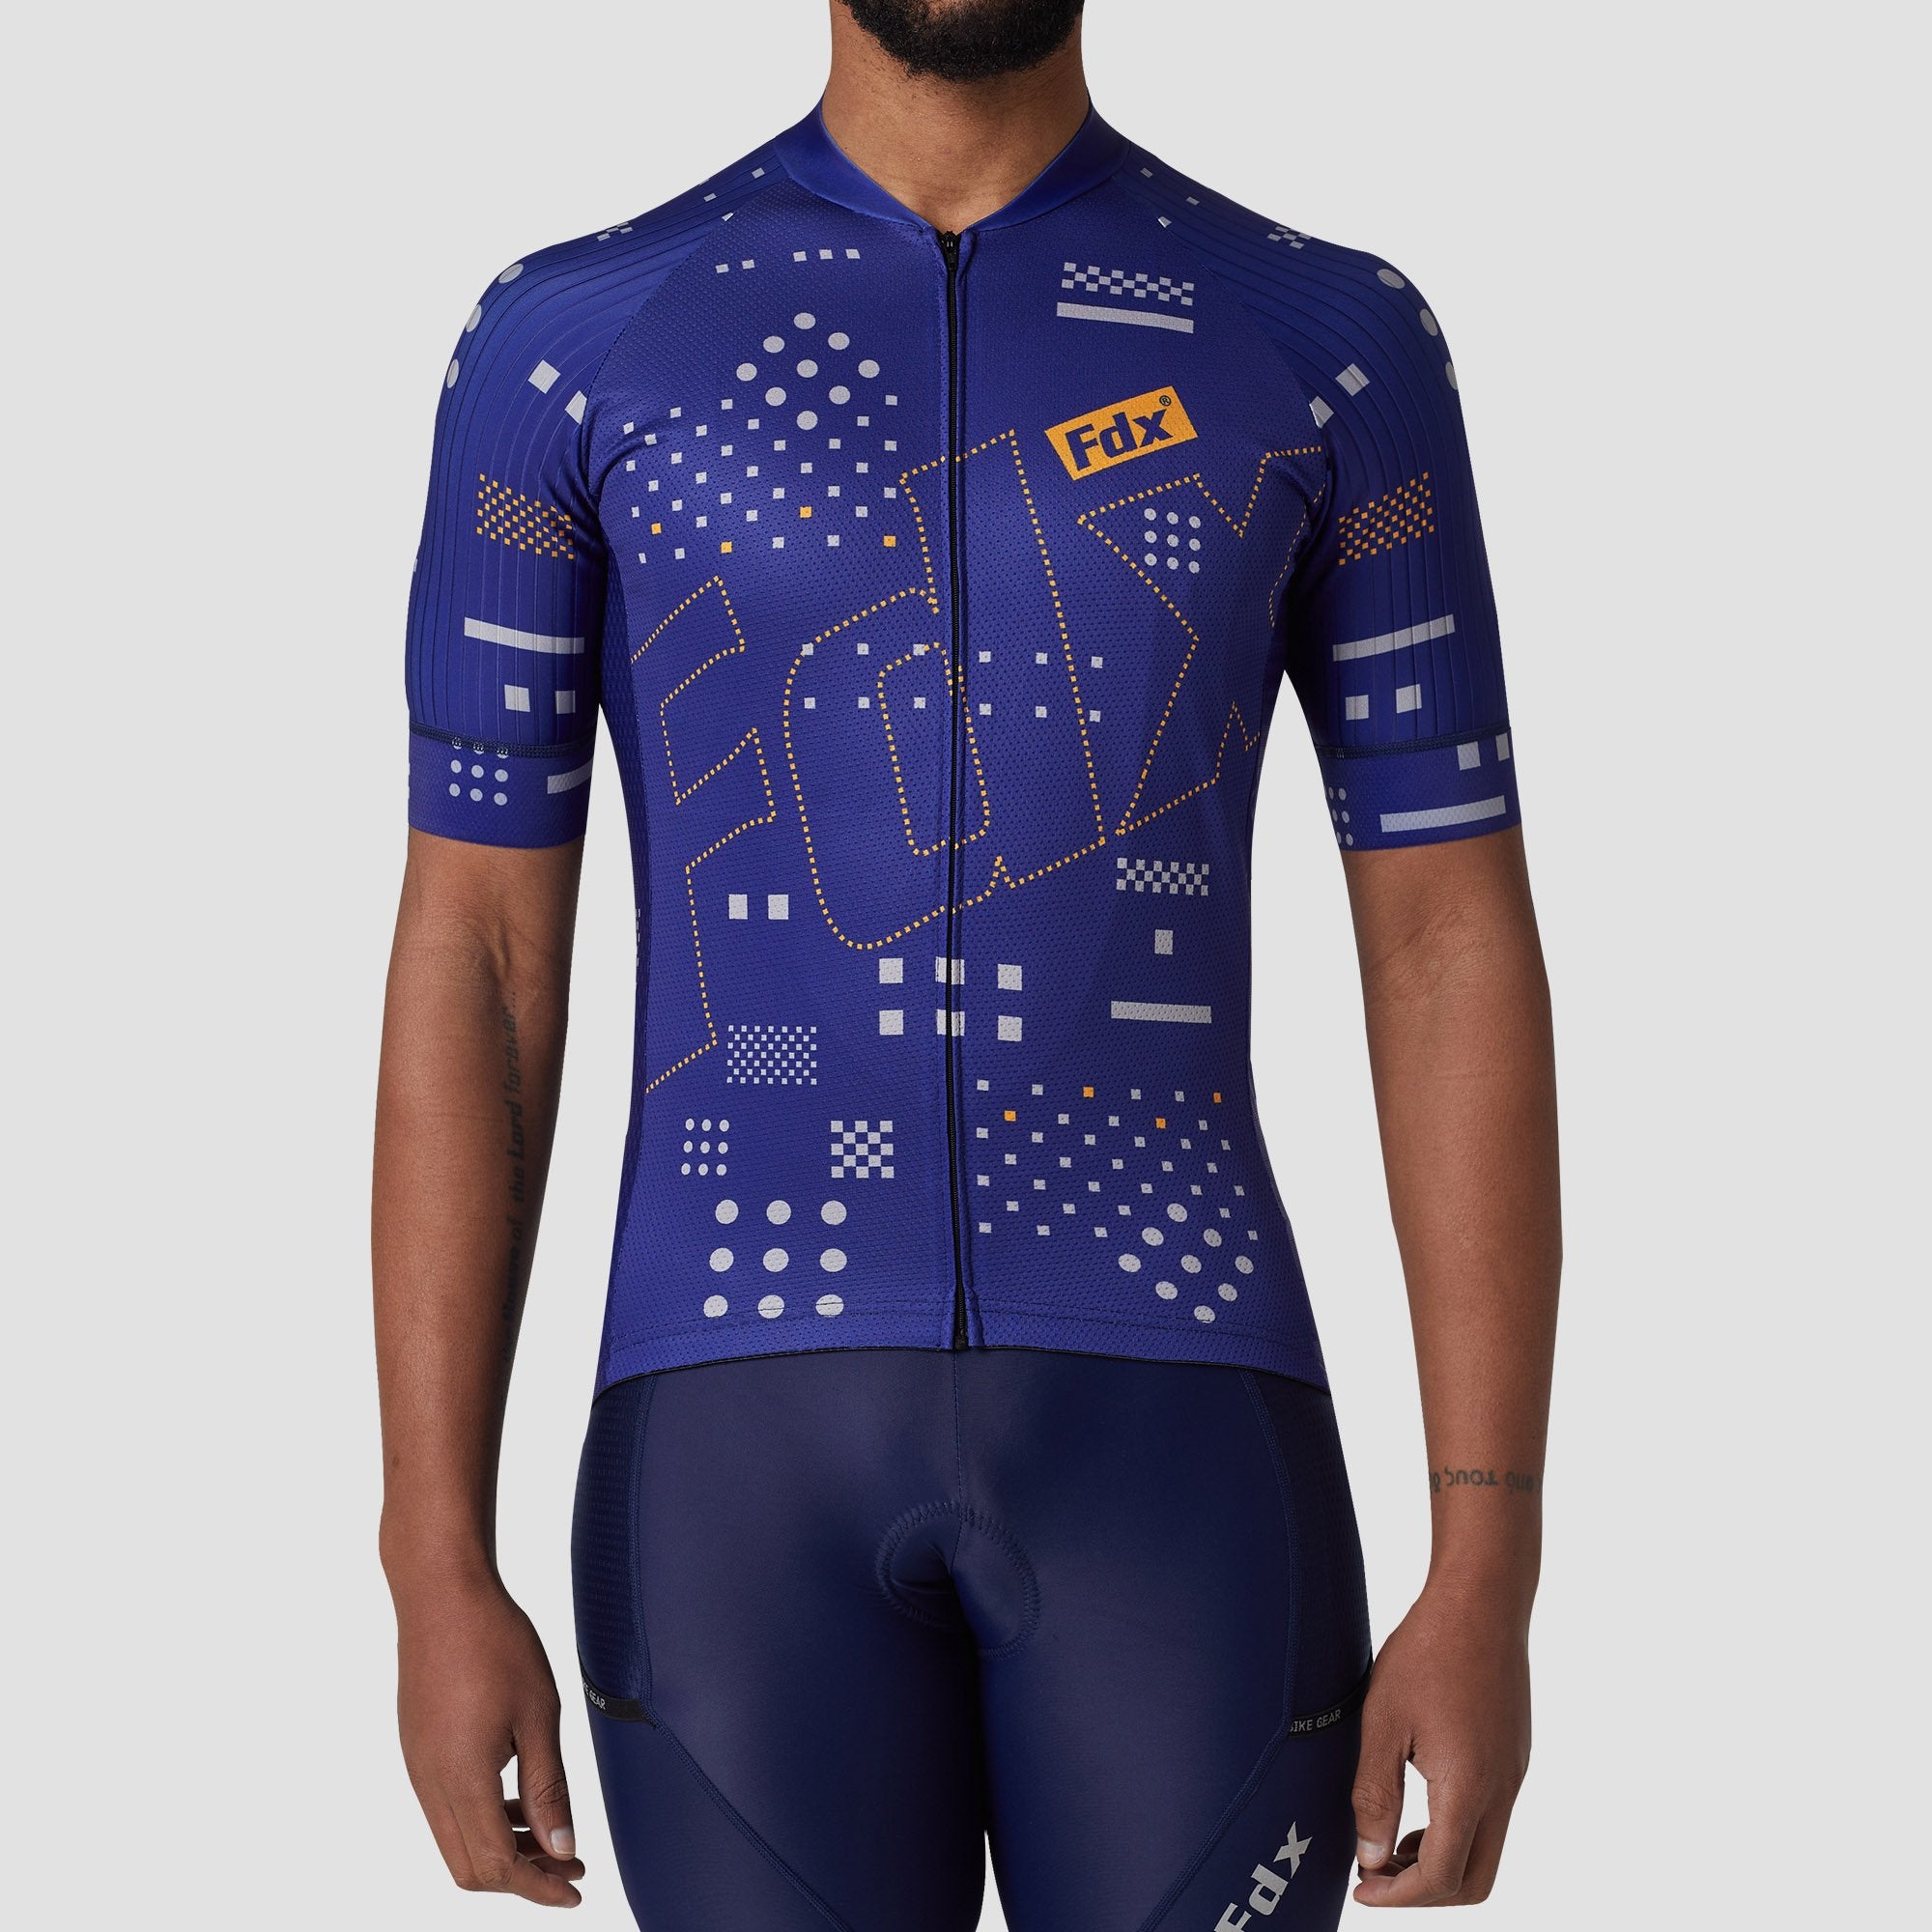 Fdx All Day Blue Men's Short Sleeve Summer Cycling Jersey